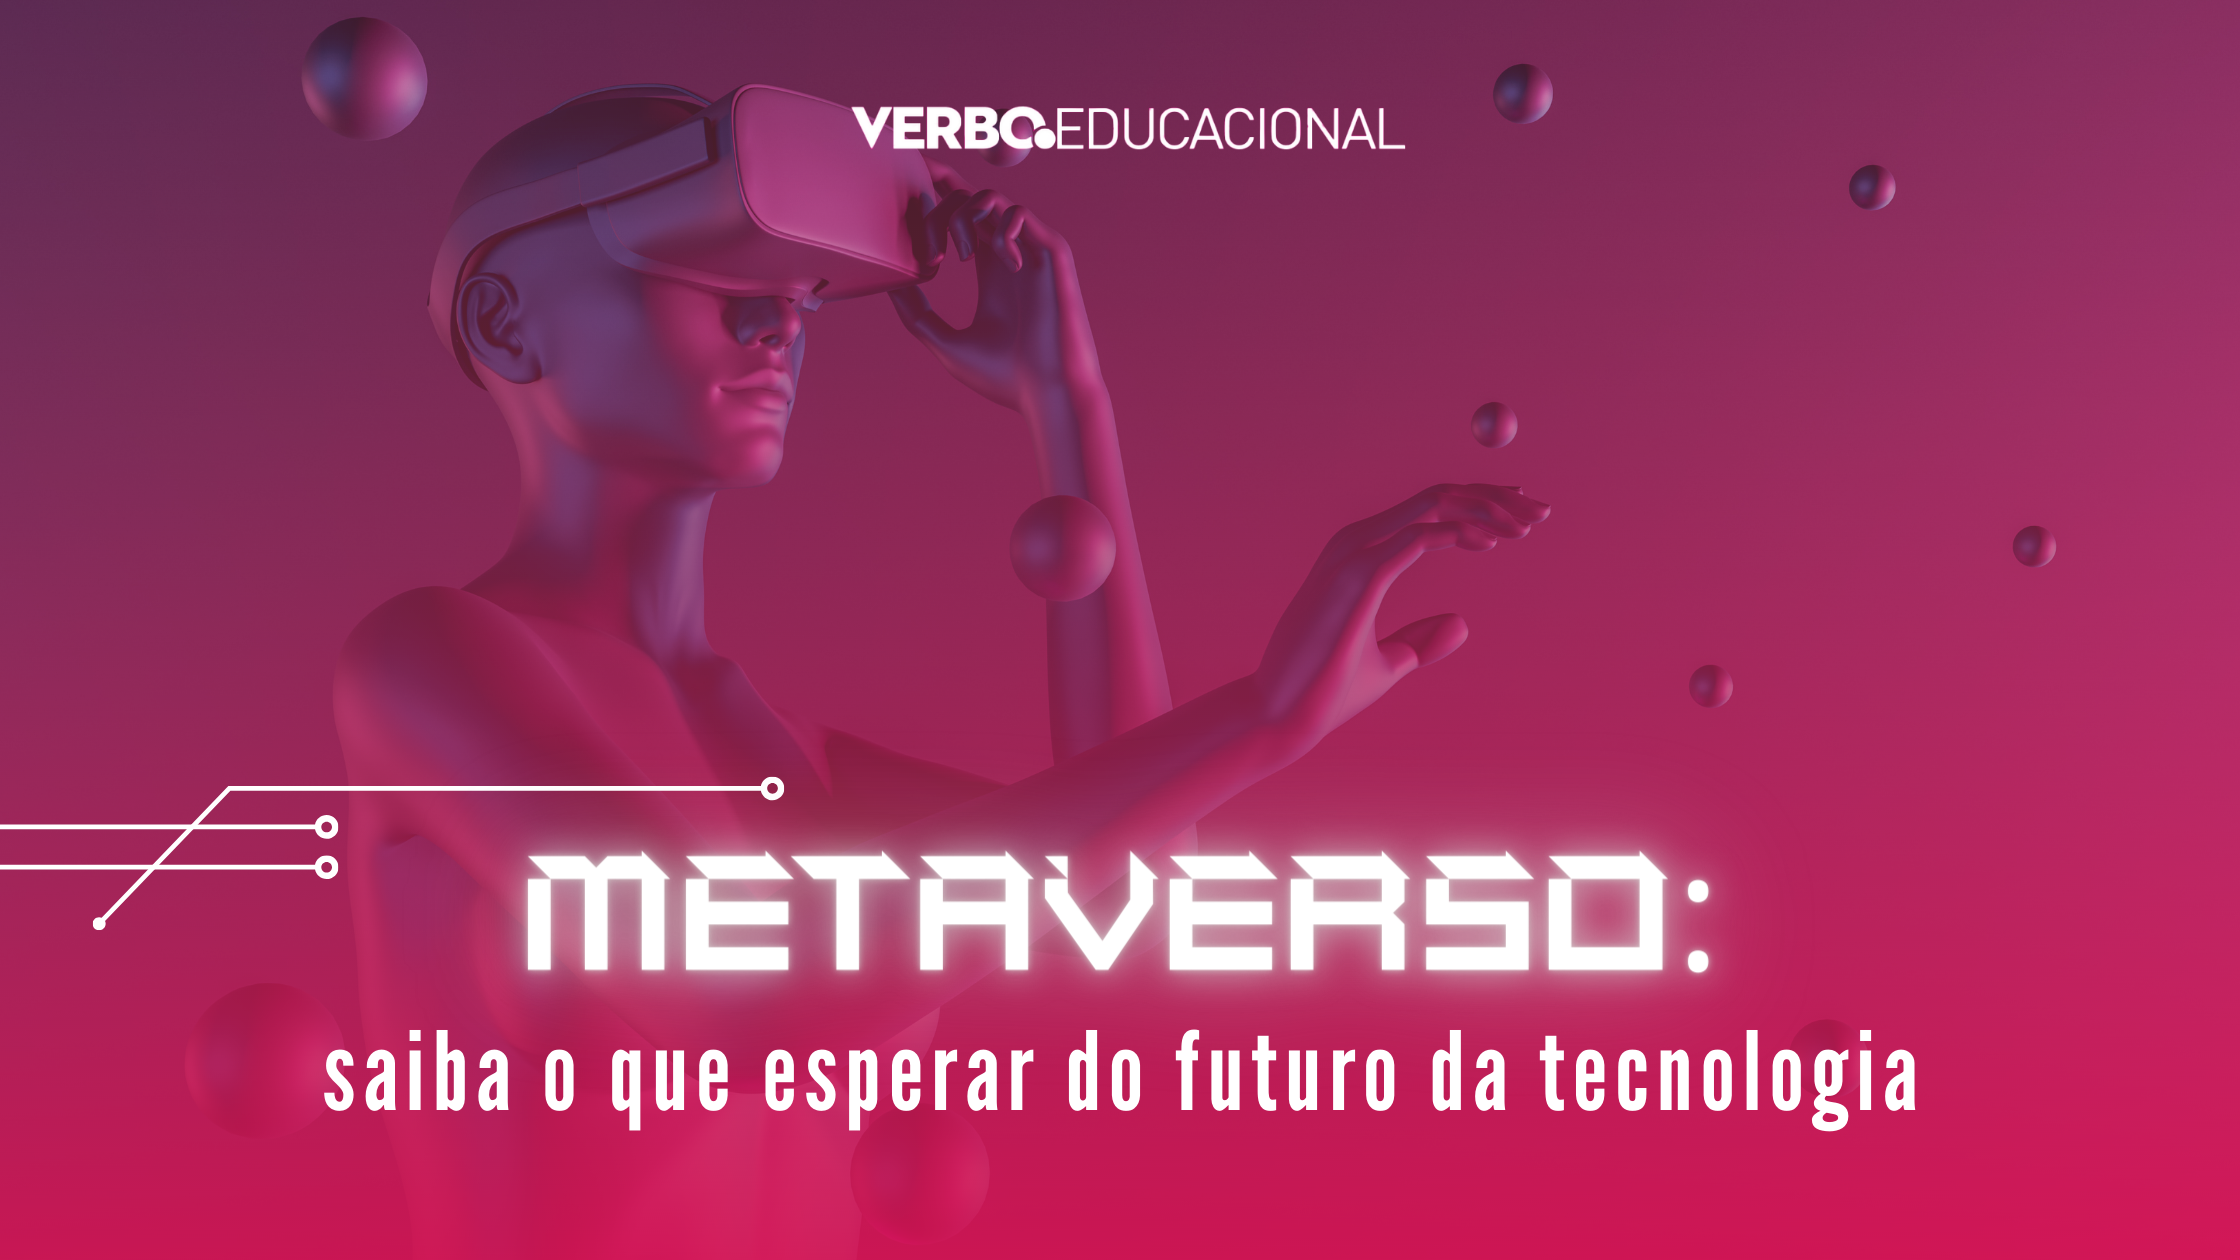 Isso é metaverso e tecnologia futurista e realidade aumentada realidade  virtual e texto terrestre